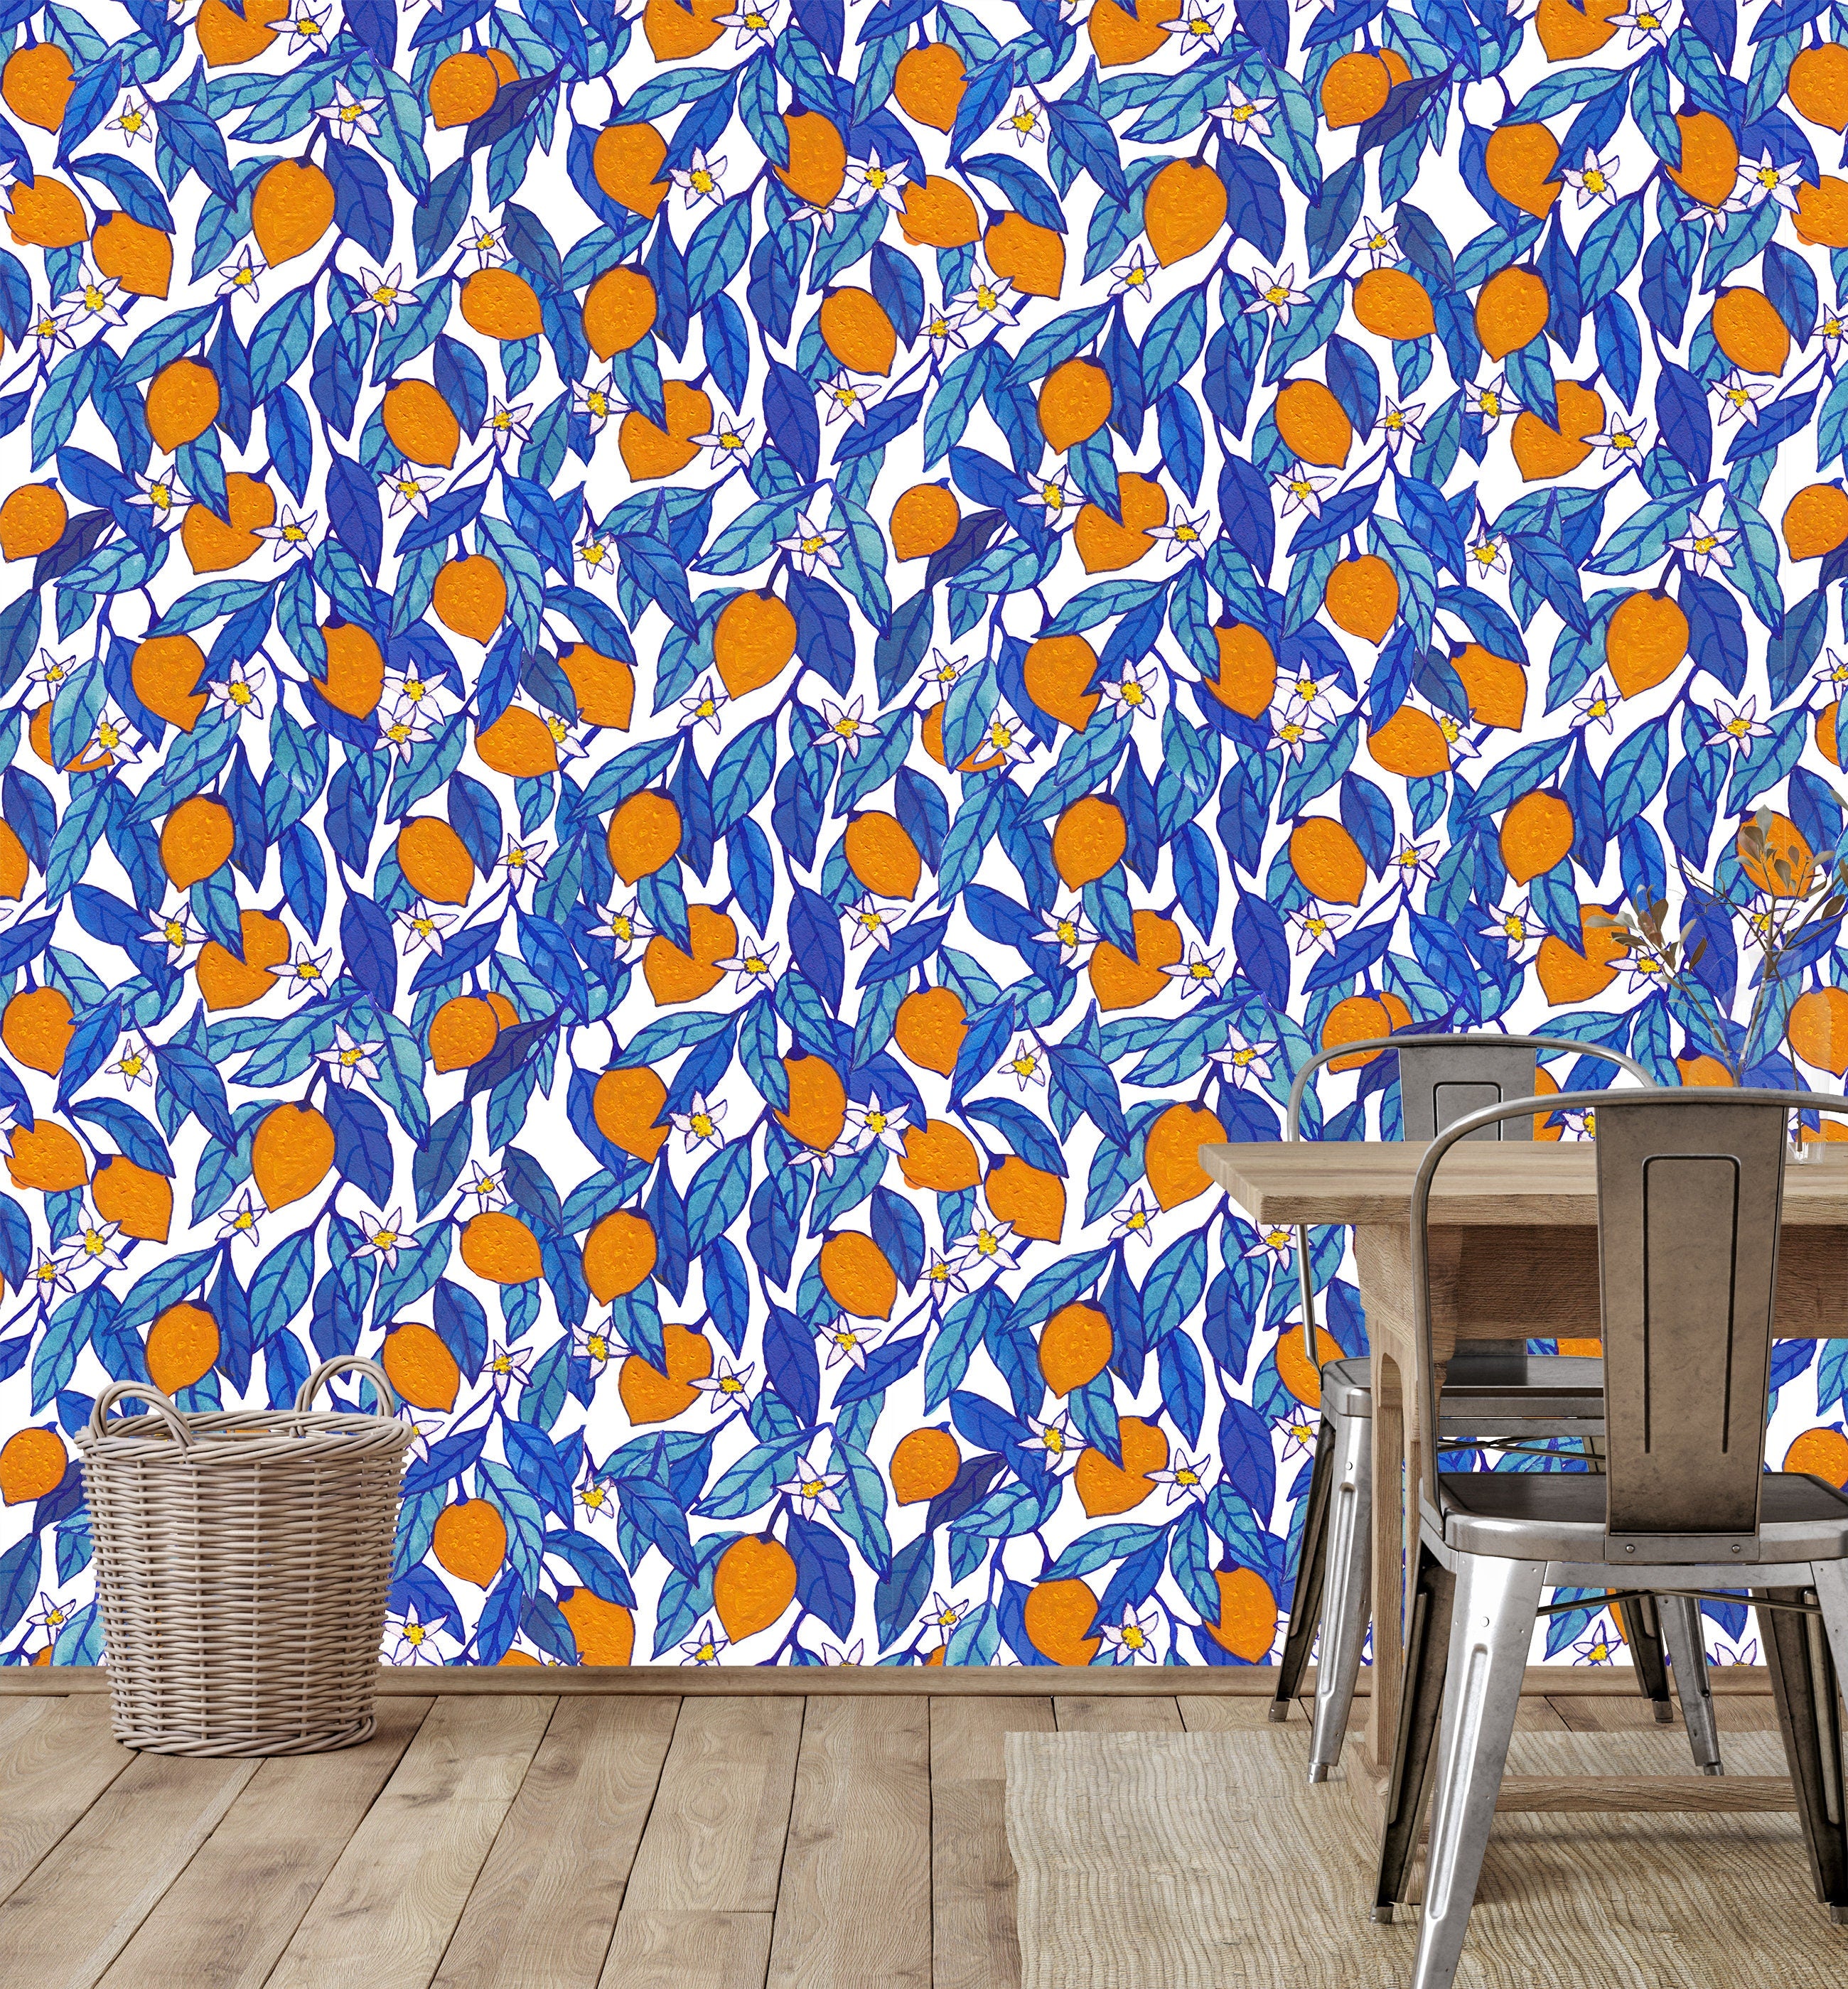 Painted Orange Leaf Wallpaper | Removable Wallpaper | Peel And Stick Wallpaper | Adhesive Wallpaper | Wall Paper Peel Stick Wall Mural 2357 - JamesAndColors